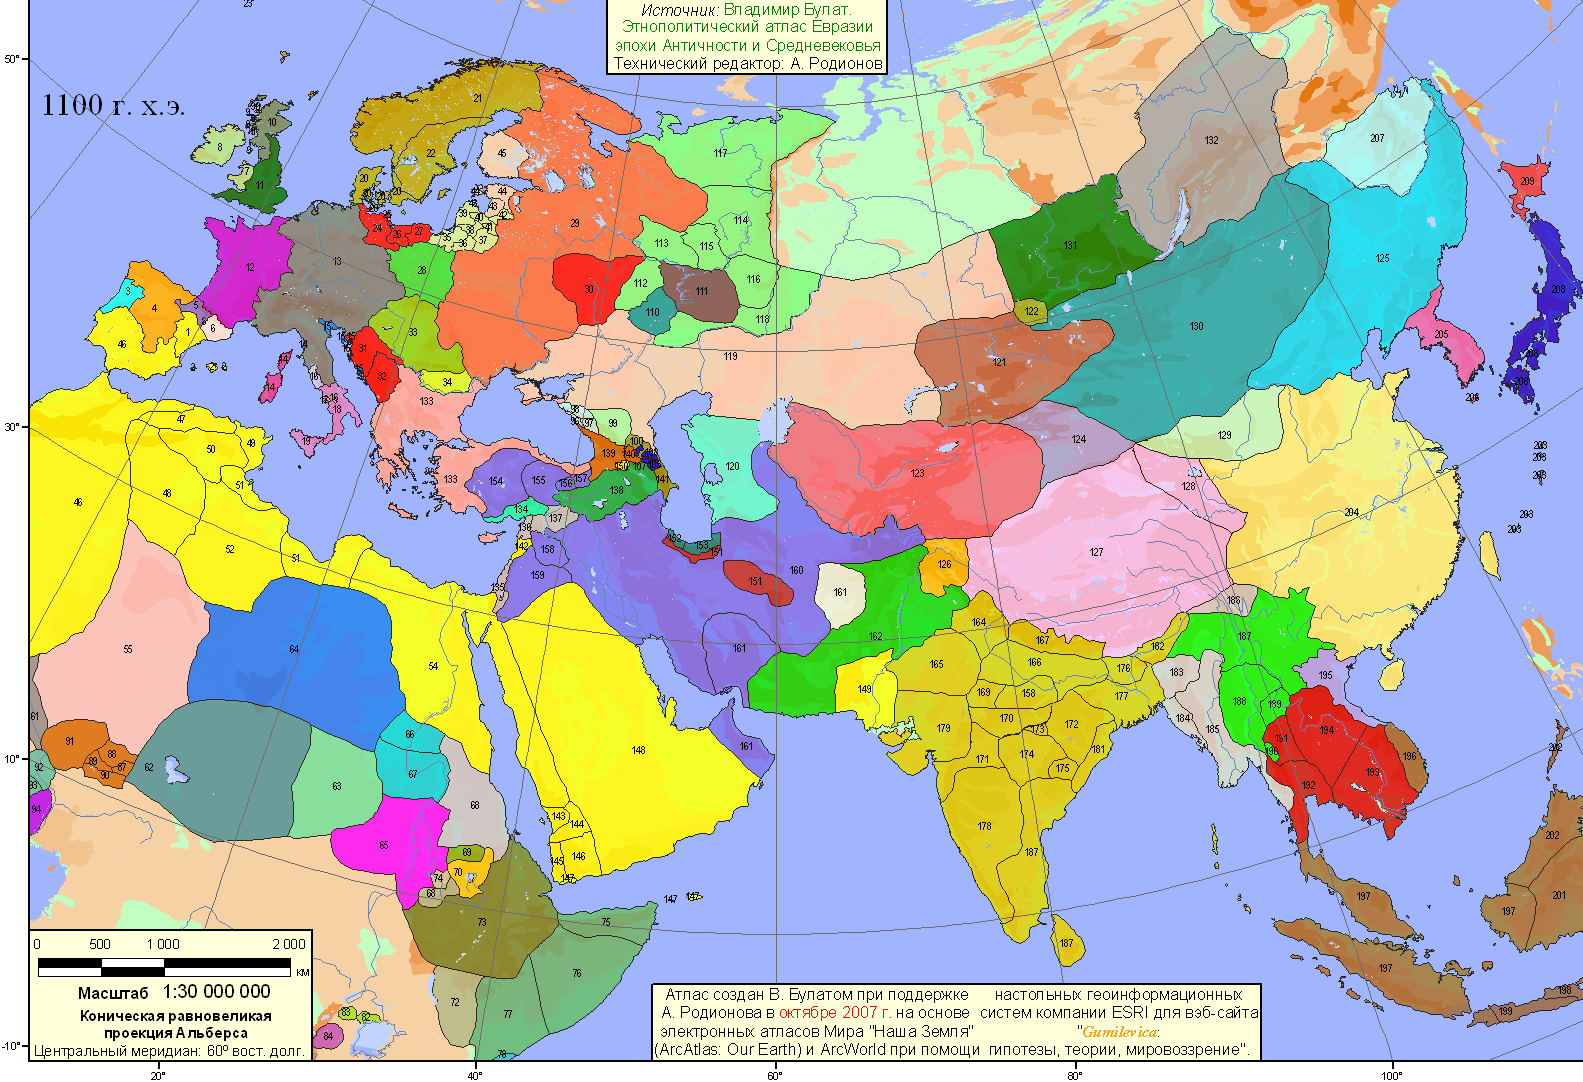 Eurasia - 1100 AD (341 Kbytes)